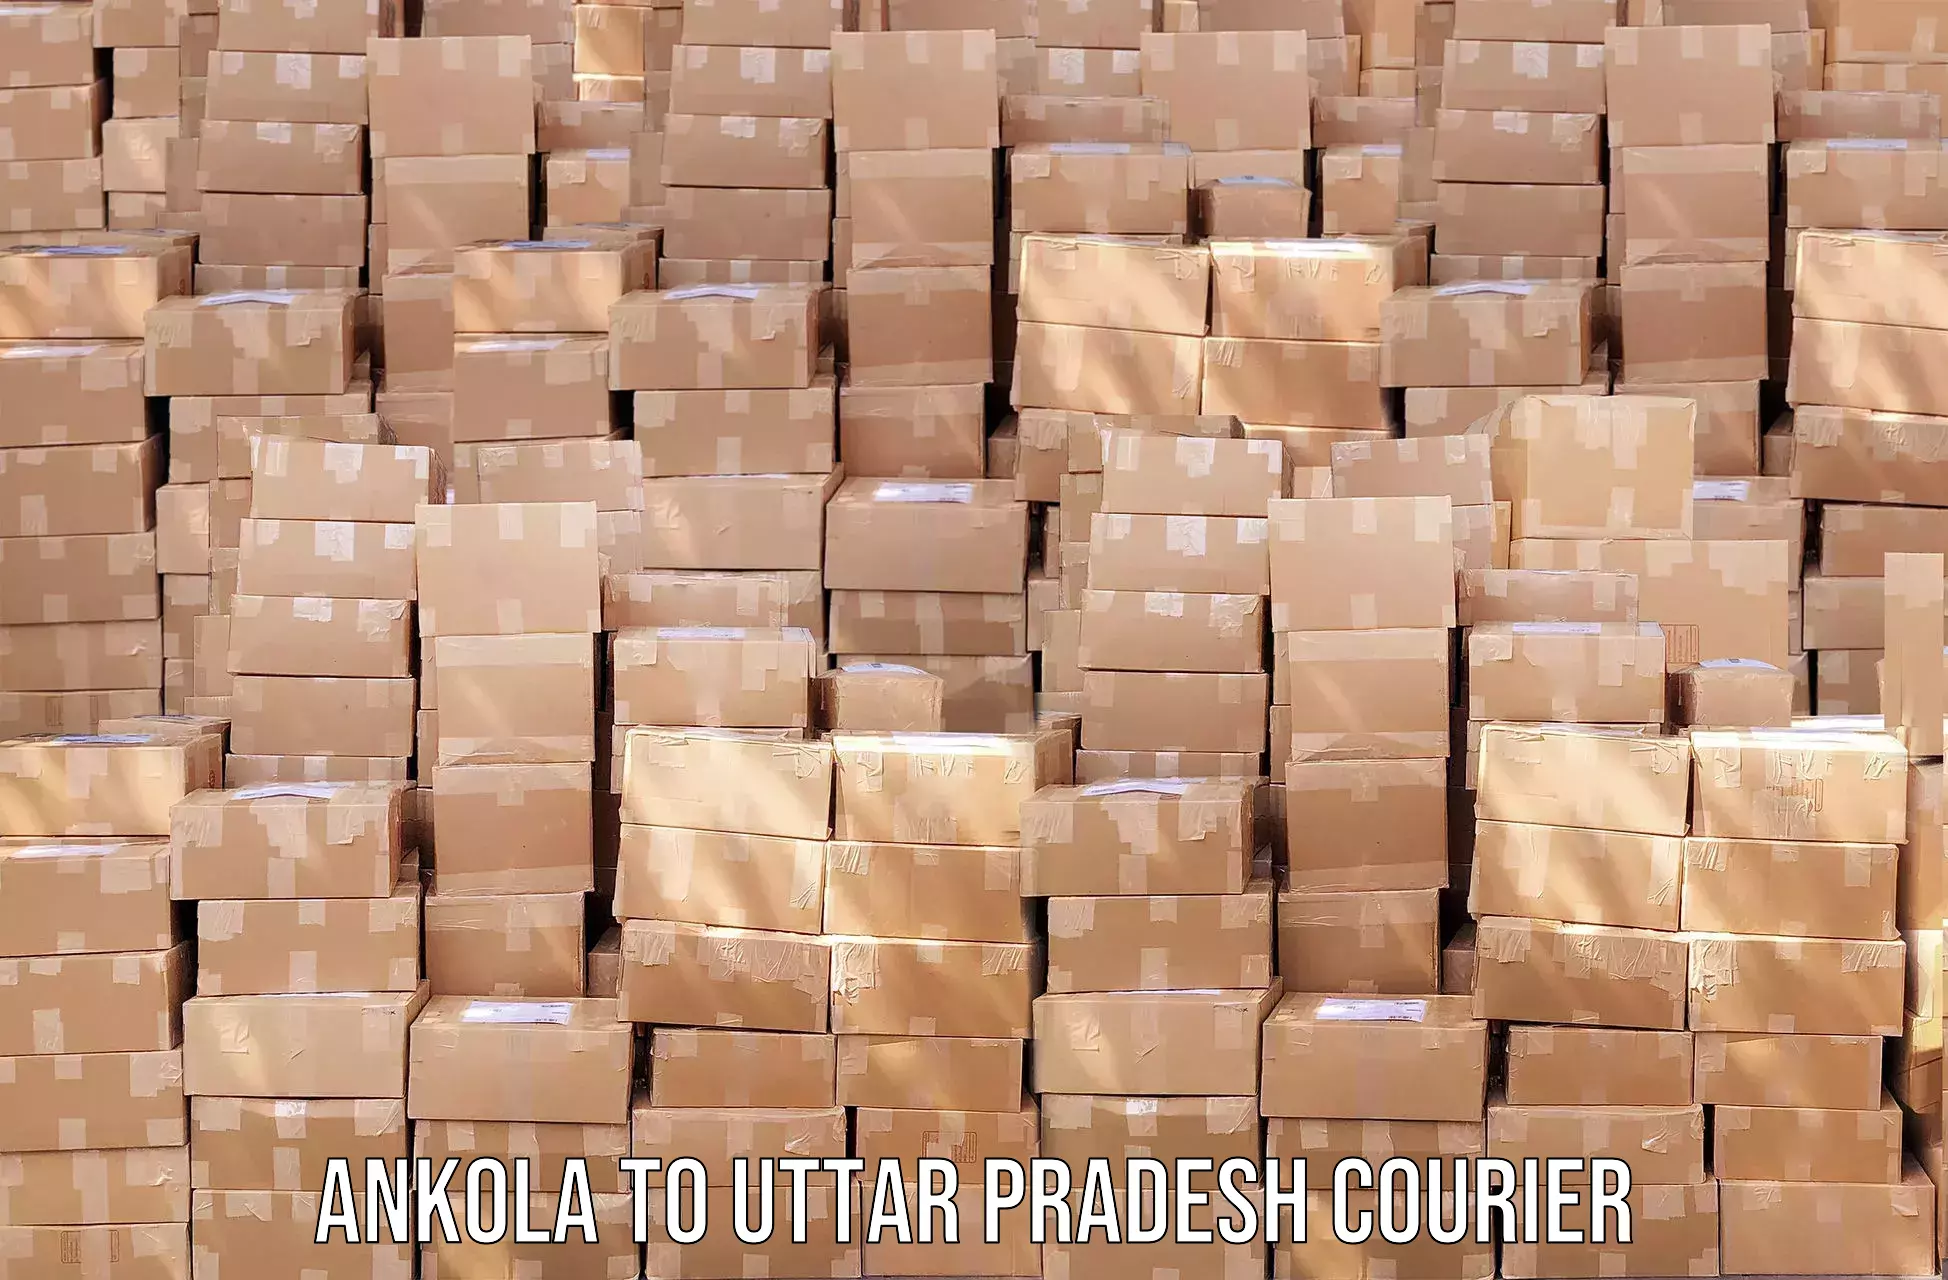 Smart courier technologies Ankola to Uttar Pradesh